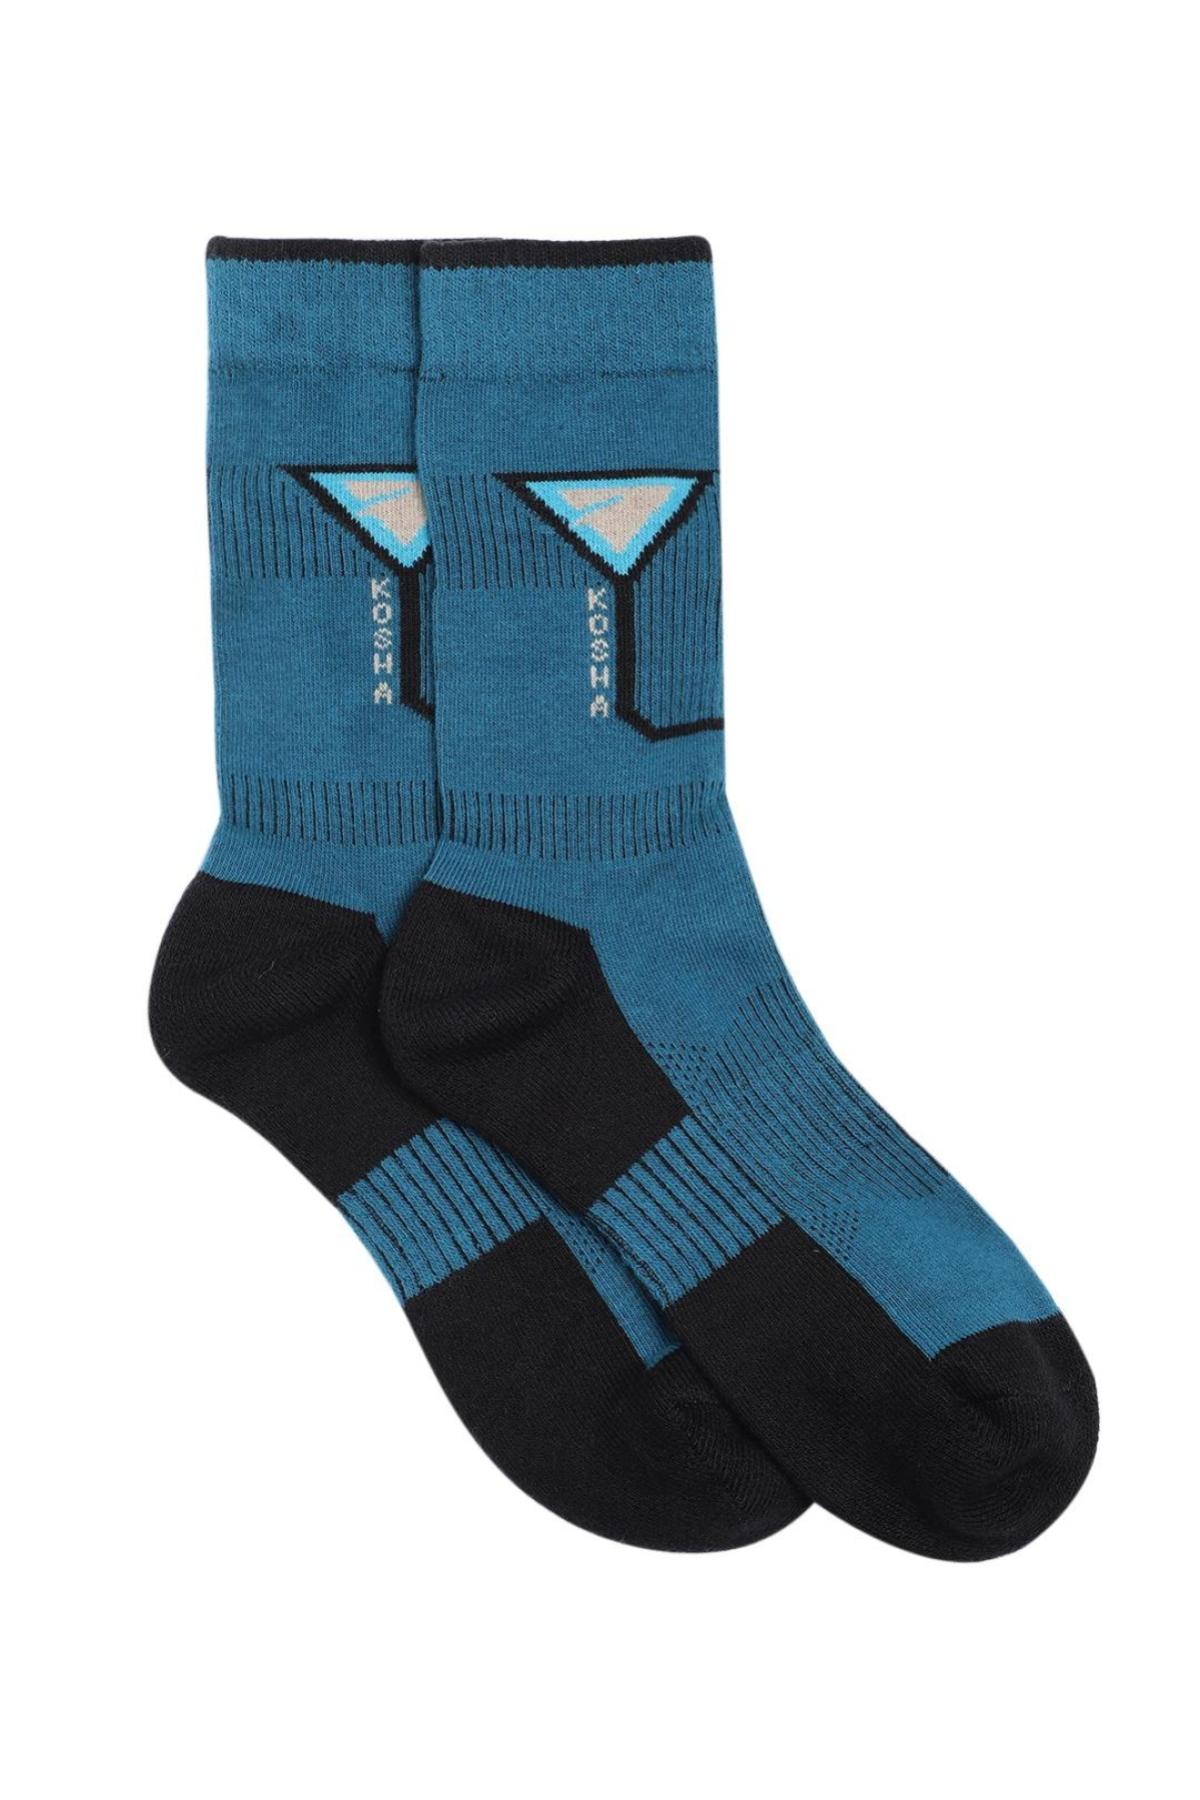 Teal & Black Regular Length Cotton Socks Pack of 2 | Men